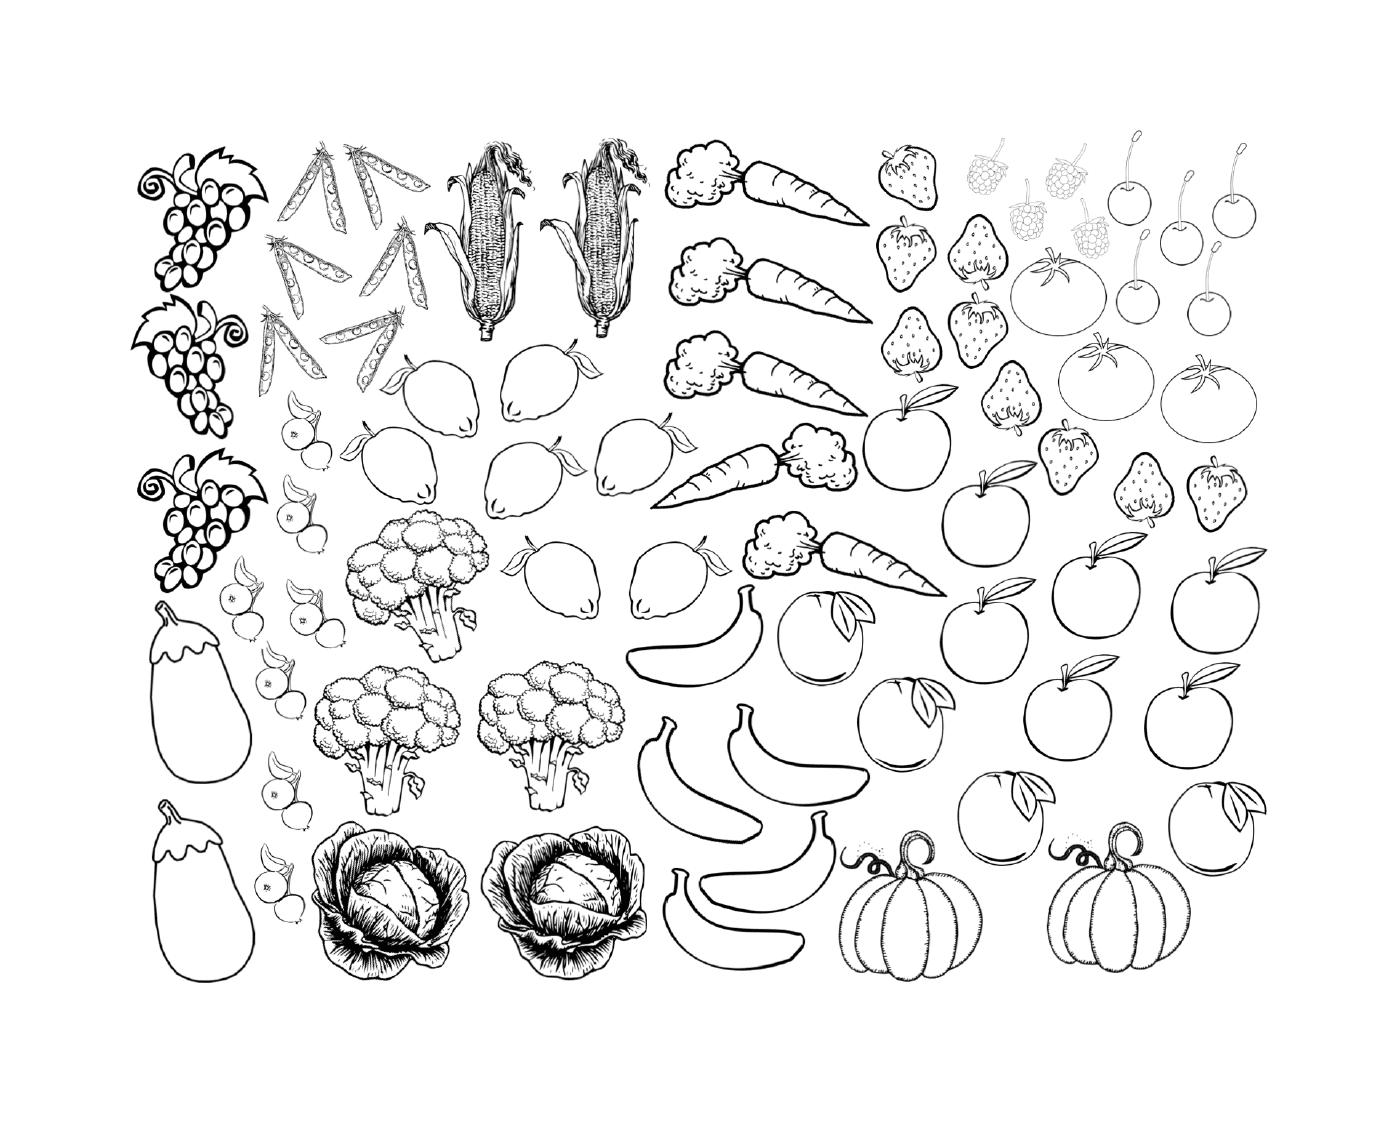   Fruits et légumes en illustration 